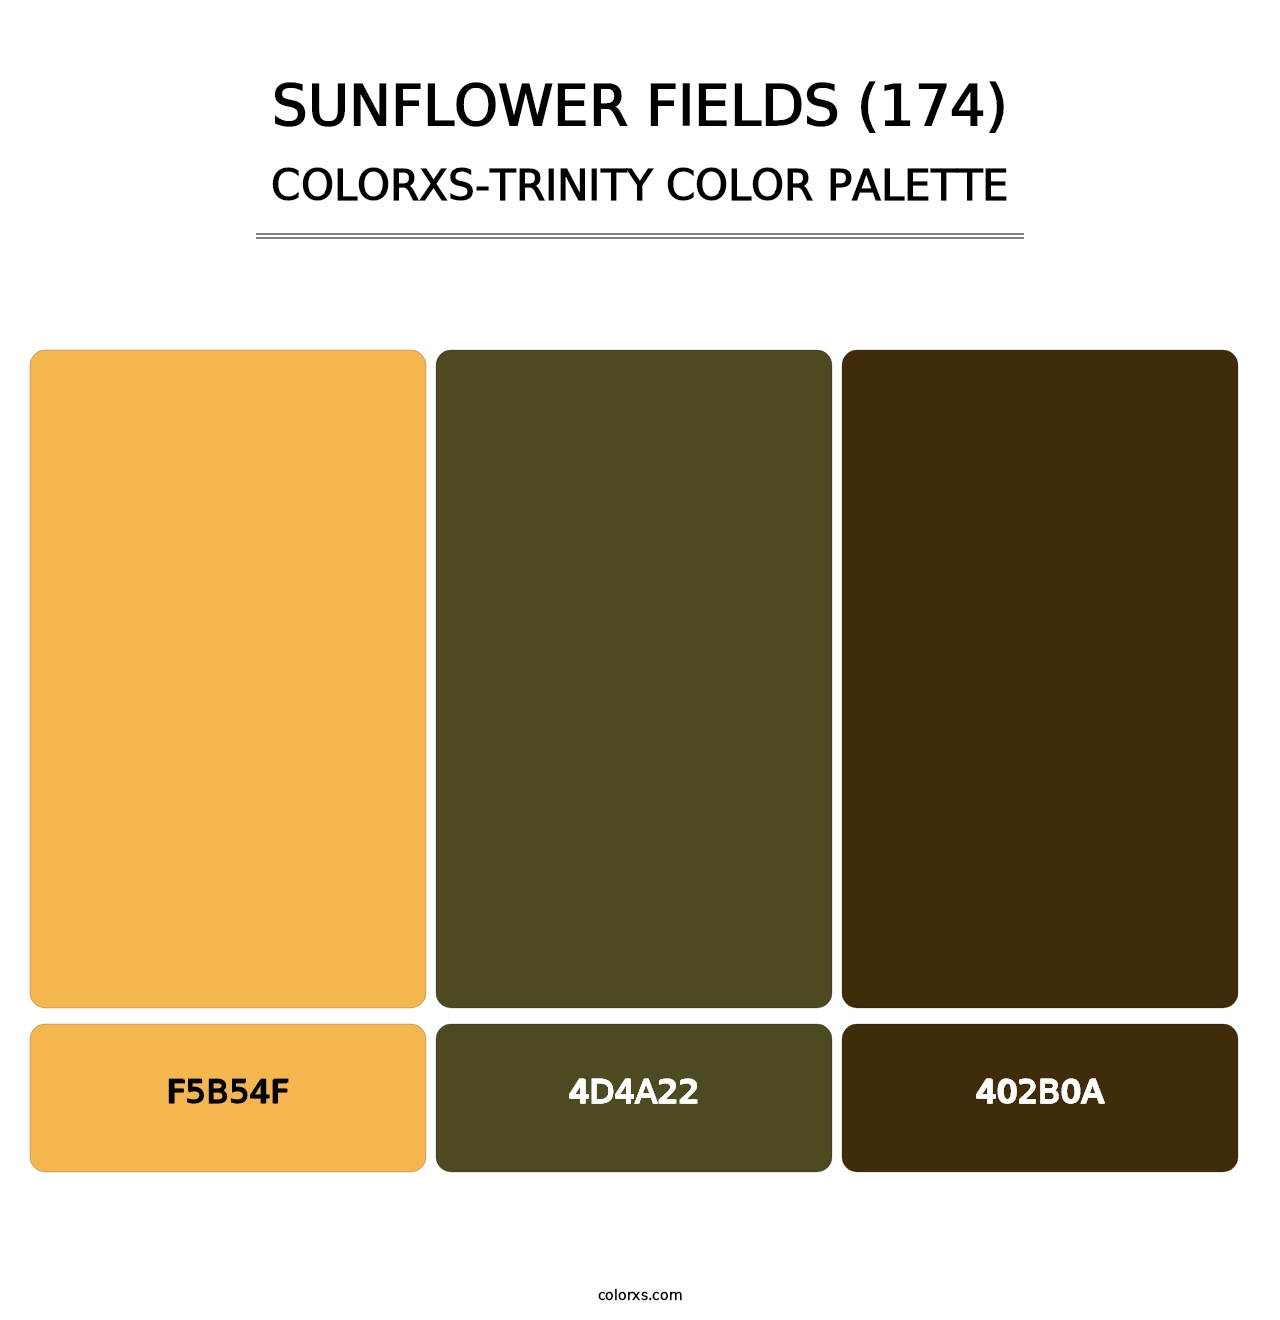 Sunflower Fields (174) - Colorxs Trinity Palette